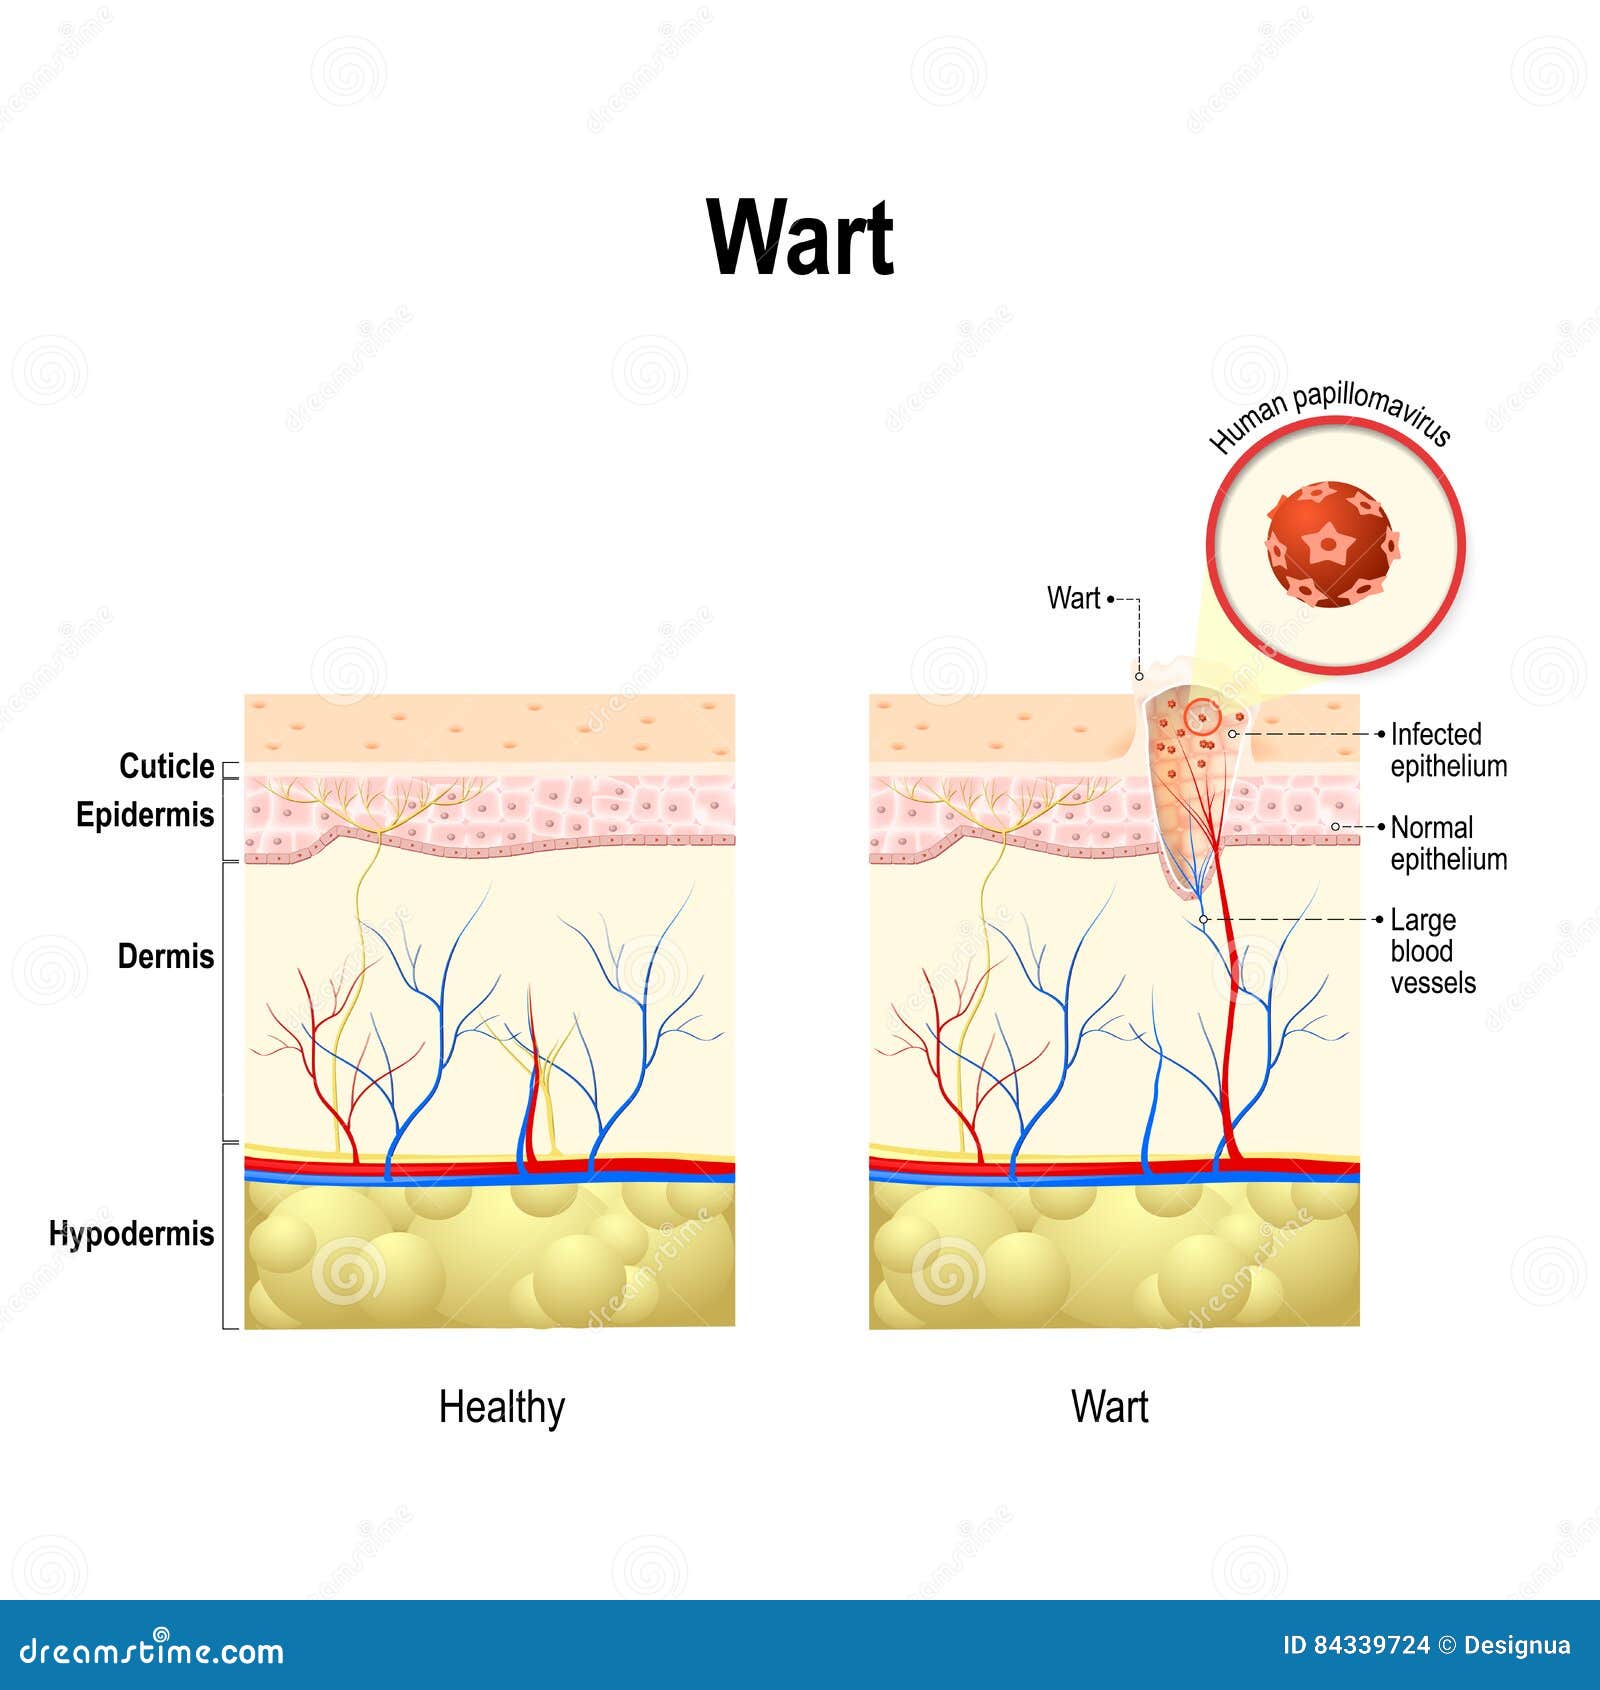 Hpv no warts abnormal pap. Hpv virus no warts - Hpv virus with no warts